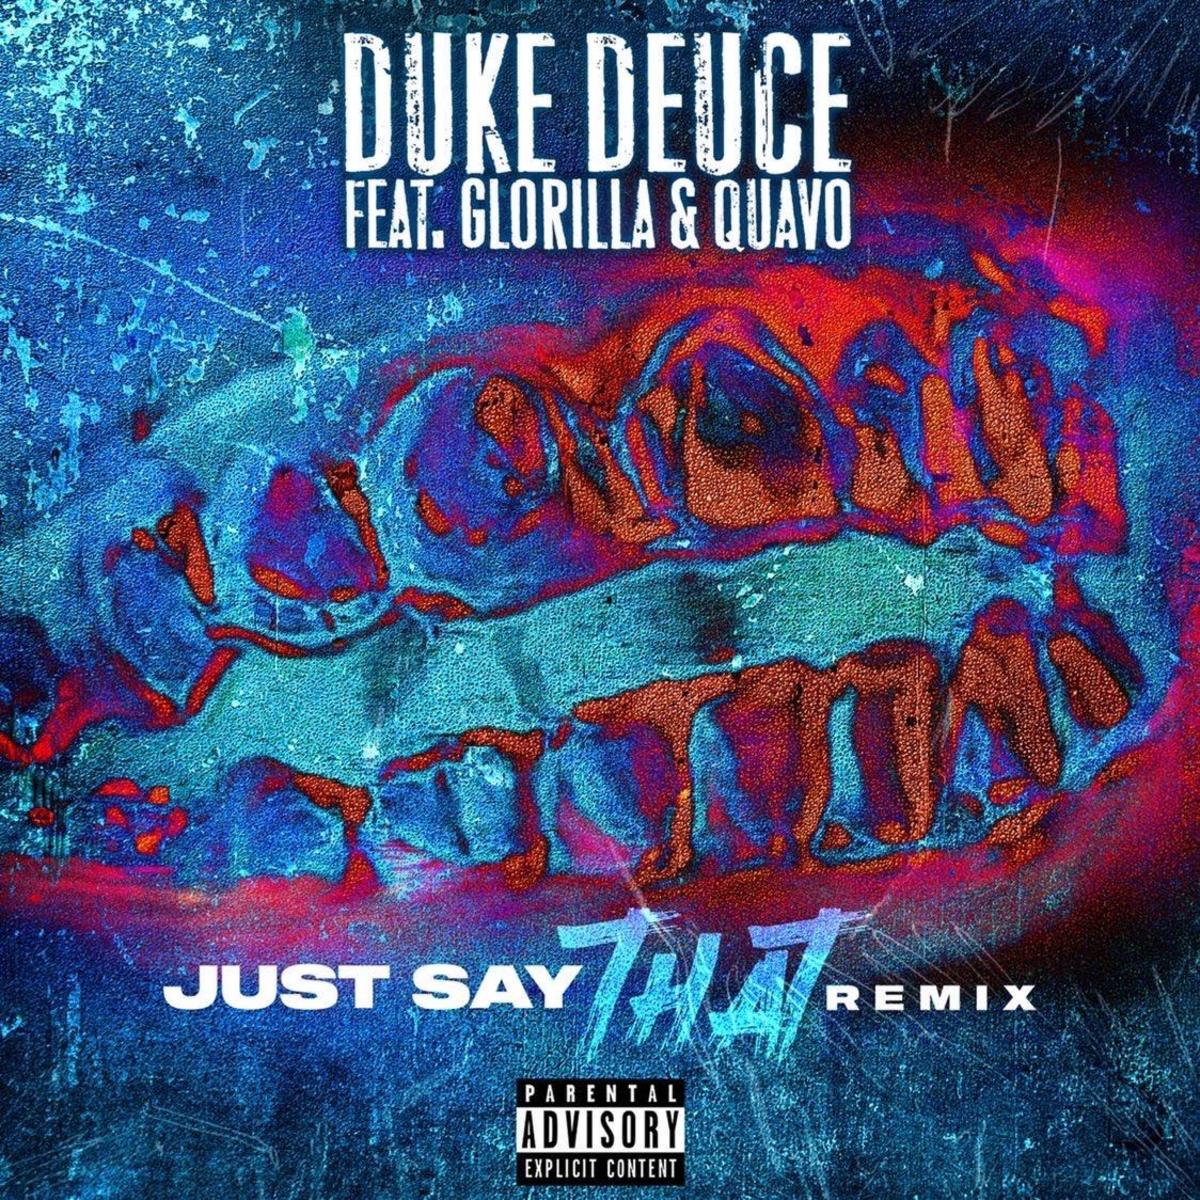 Duke Deuce ft. Quavo & Glorilla - Just Say That [Remix]